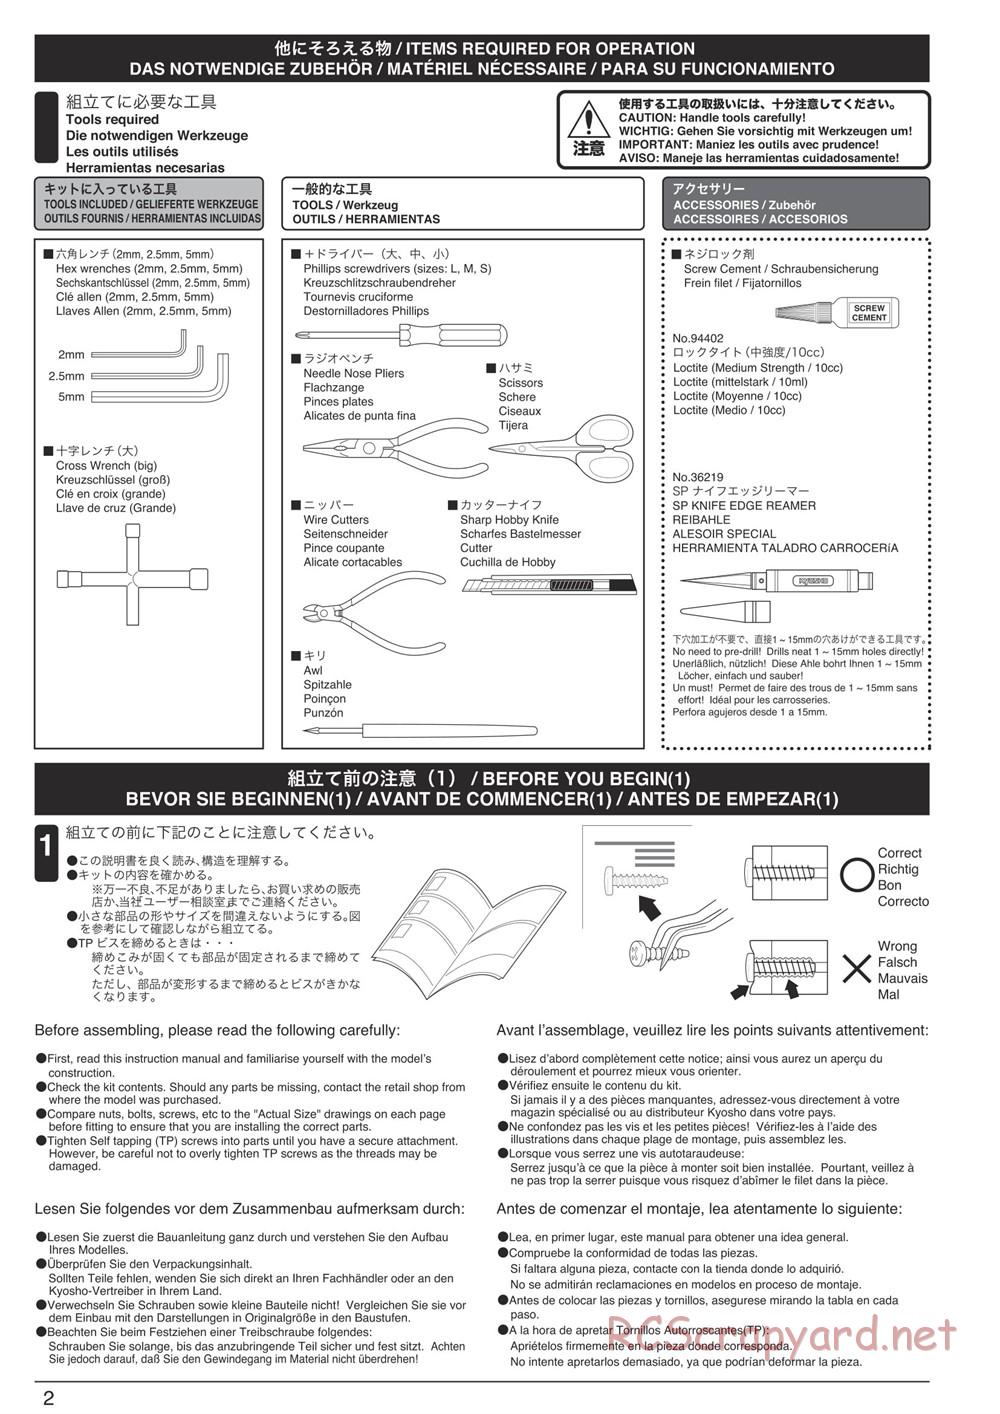 Kyosho - DMT-VE - Manual - Page 2